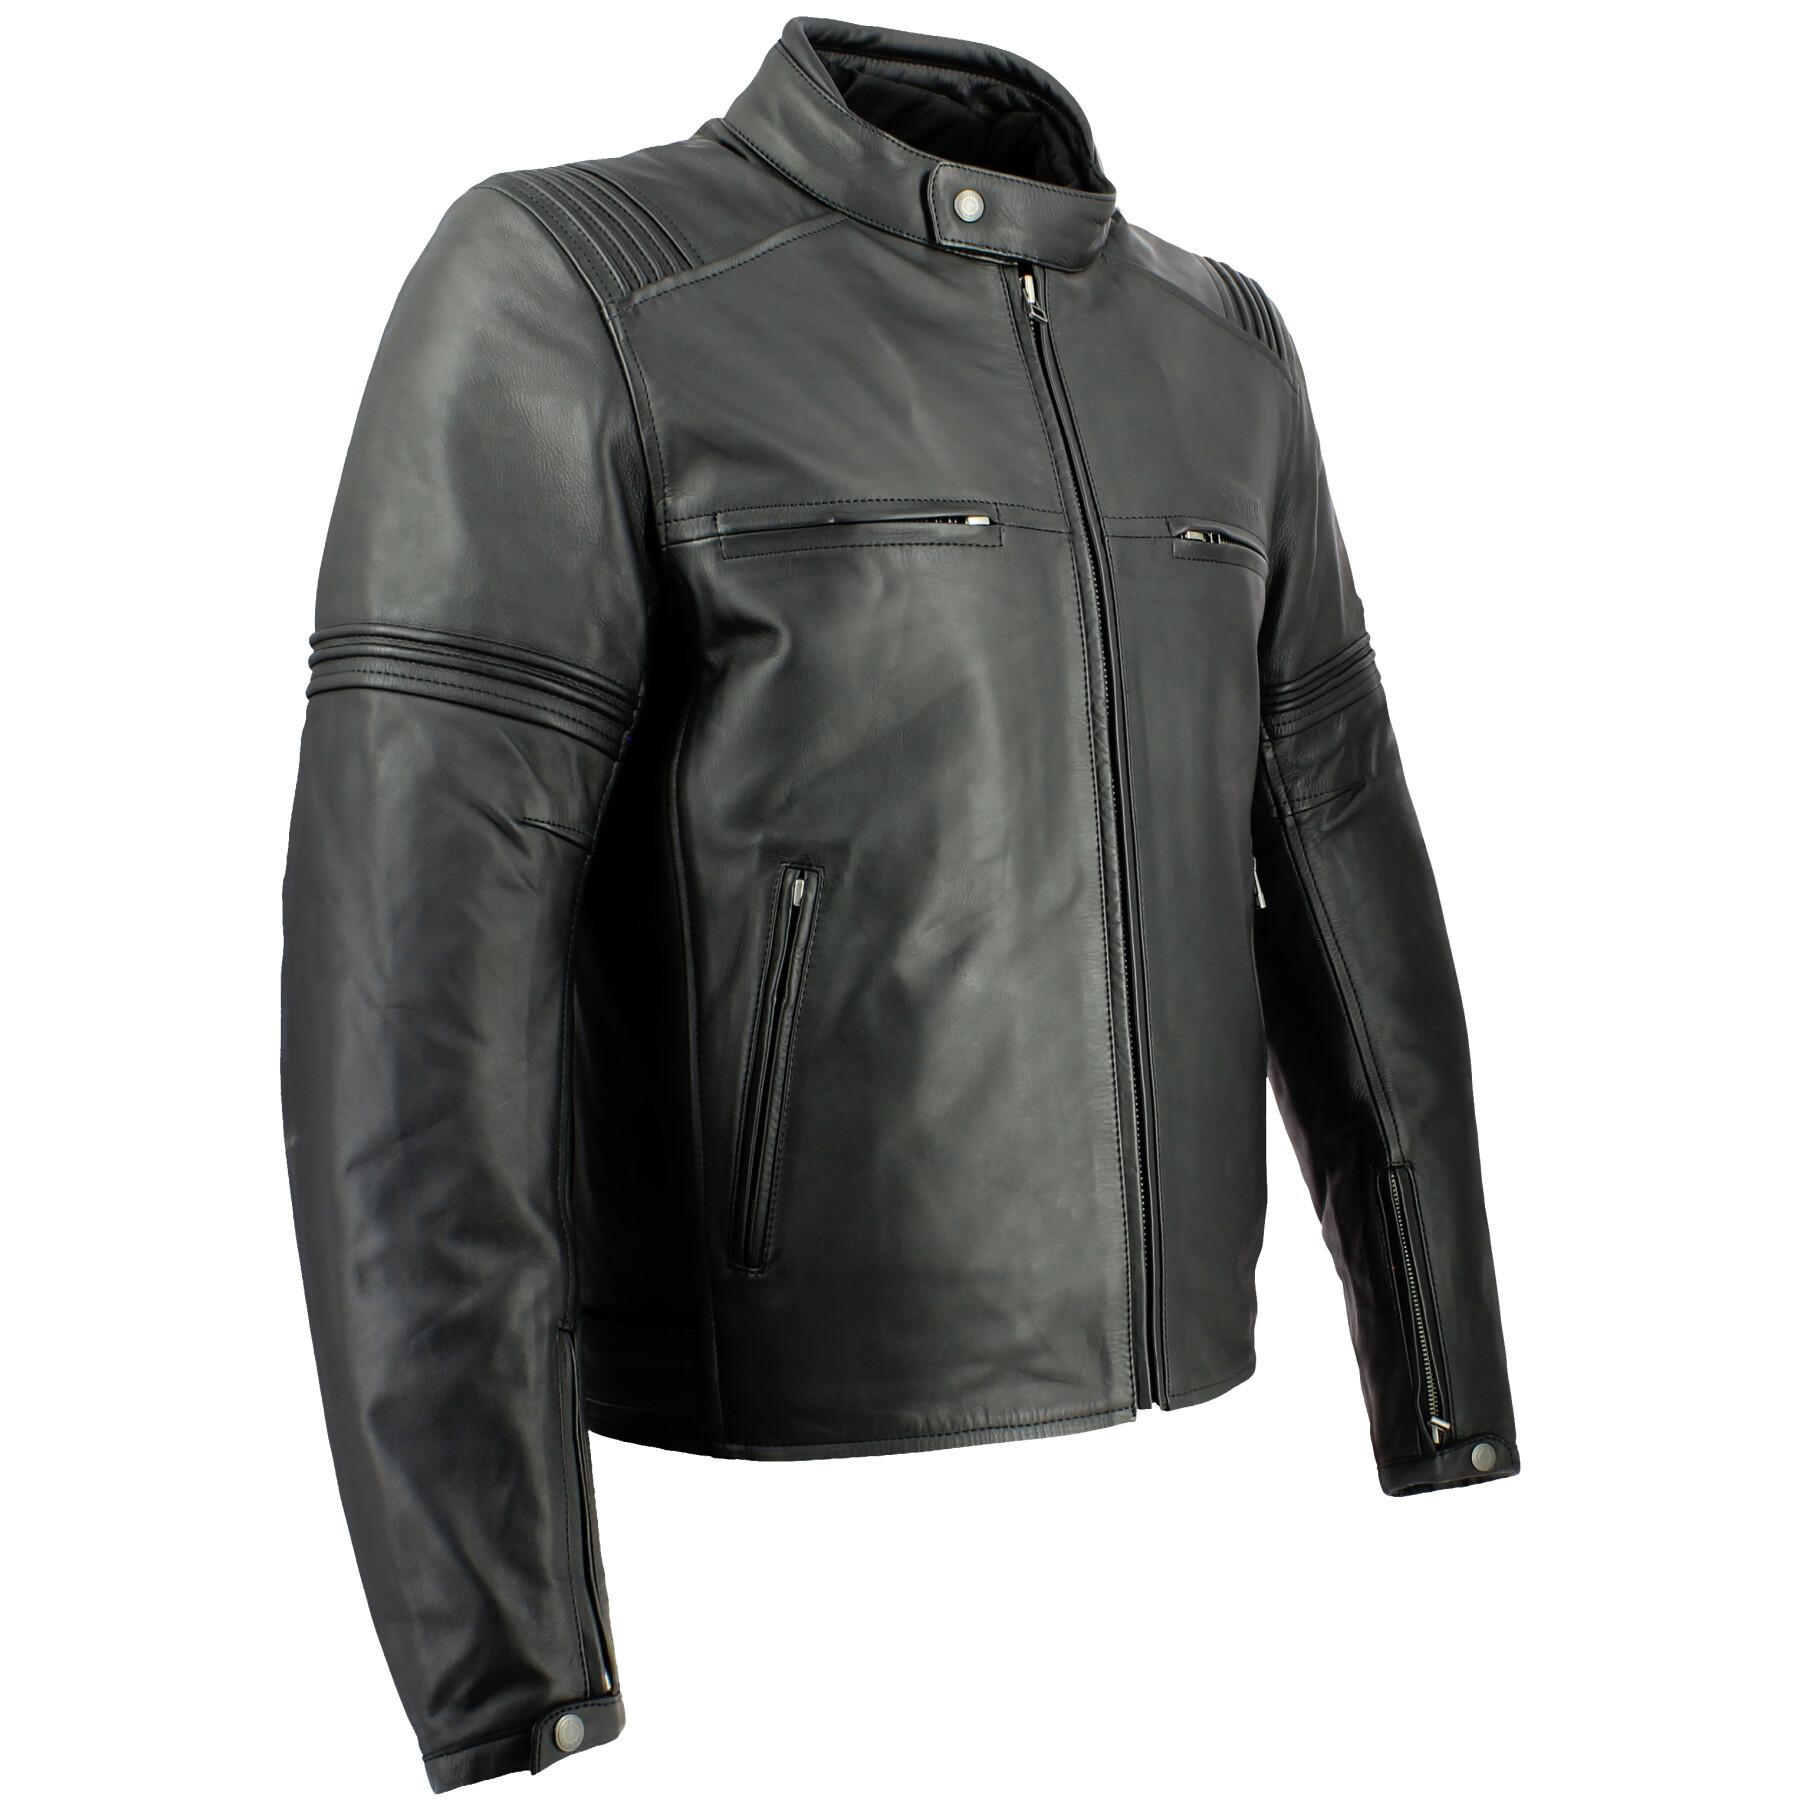 Motorcycle leather jacket Soubirac Palmer